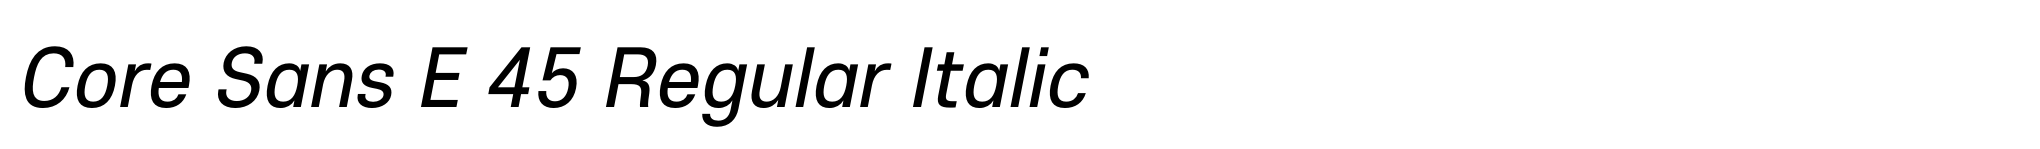 Core Sans E 45 Regular Italic image